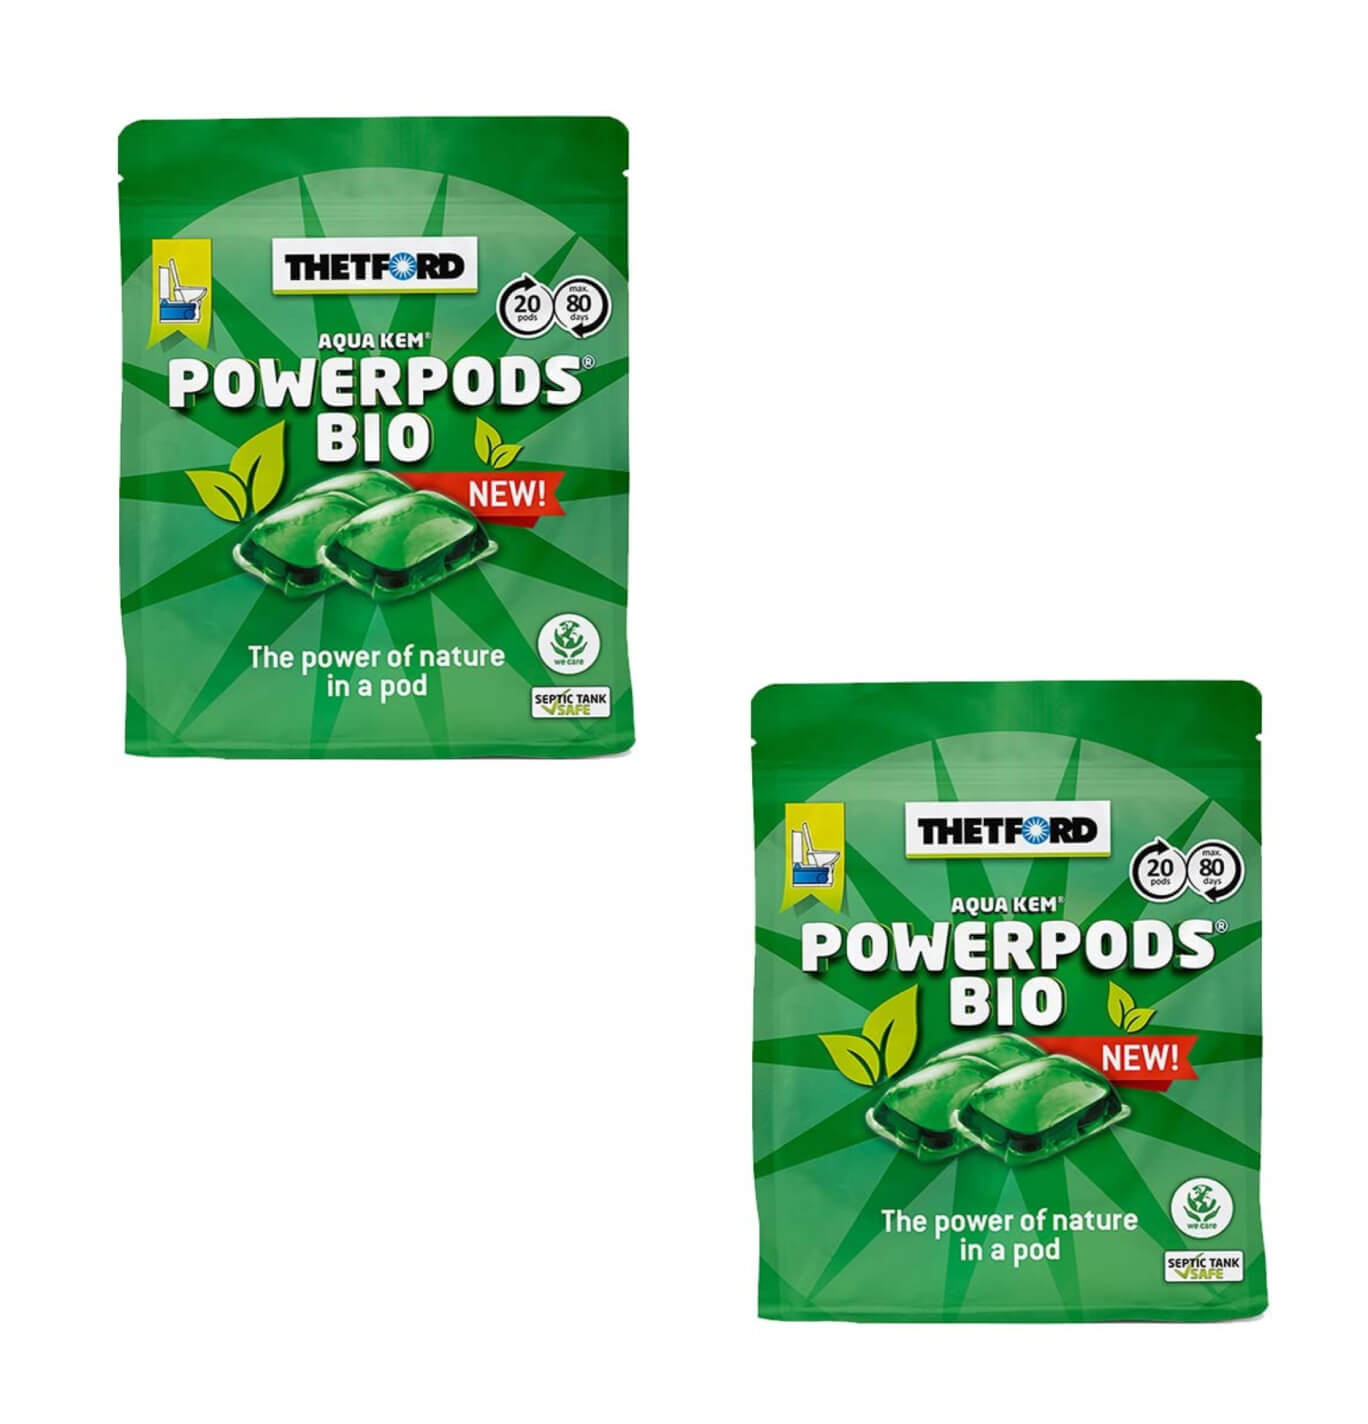 2 x Thetford Aqua Kem PowerPods Bio Green Pods | 40 Pods Bundle Image